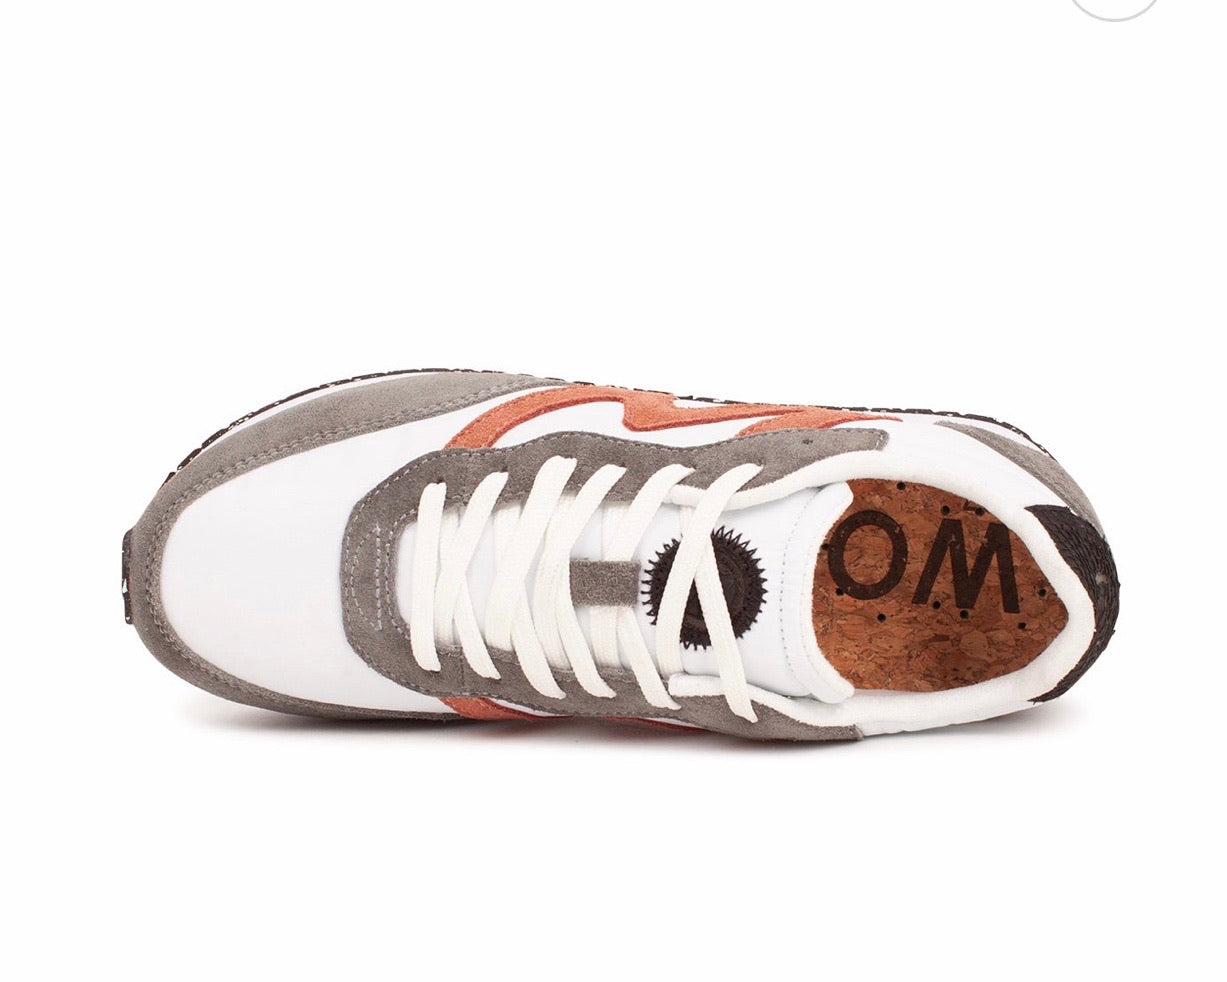 Woden - Olivia II sneakers Autumn grey/ White